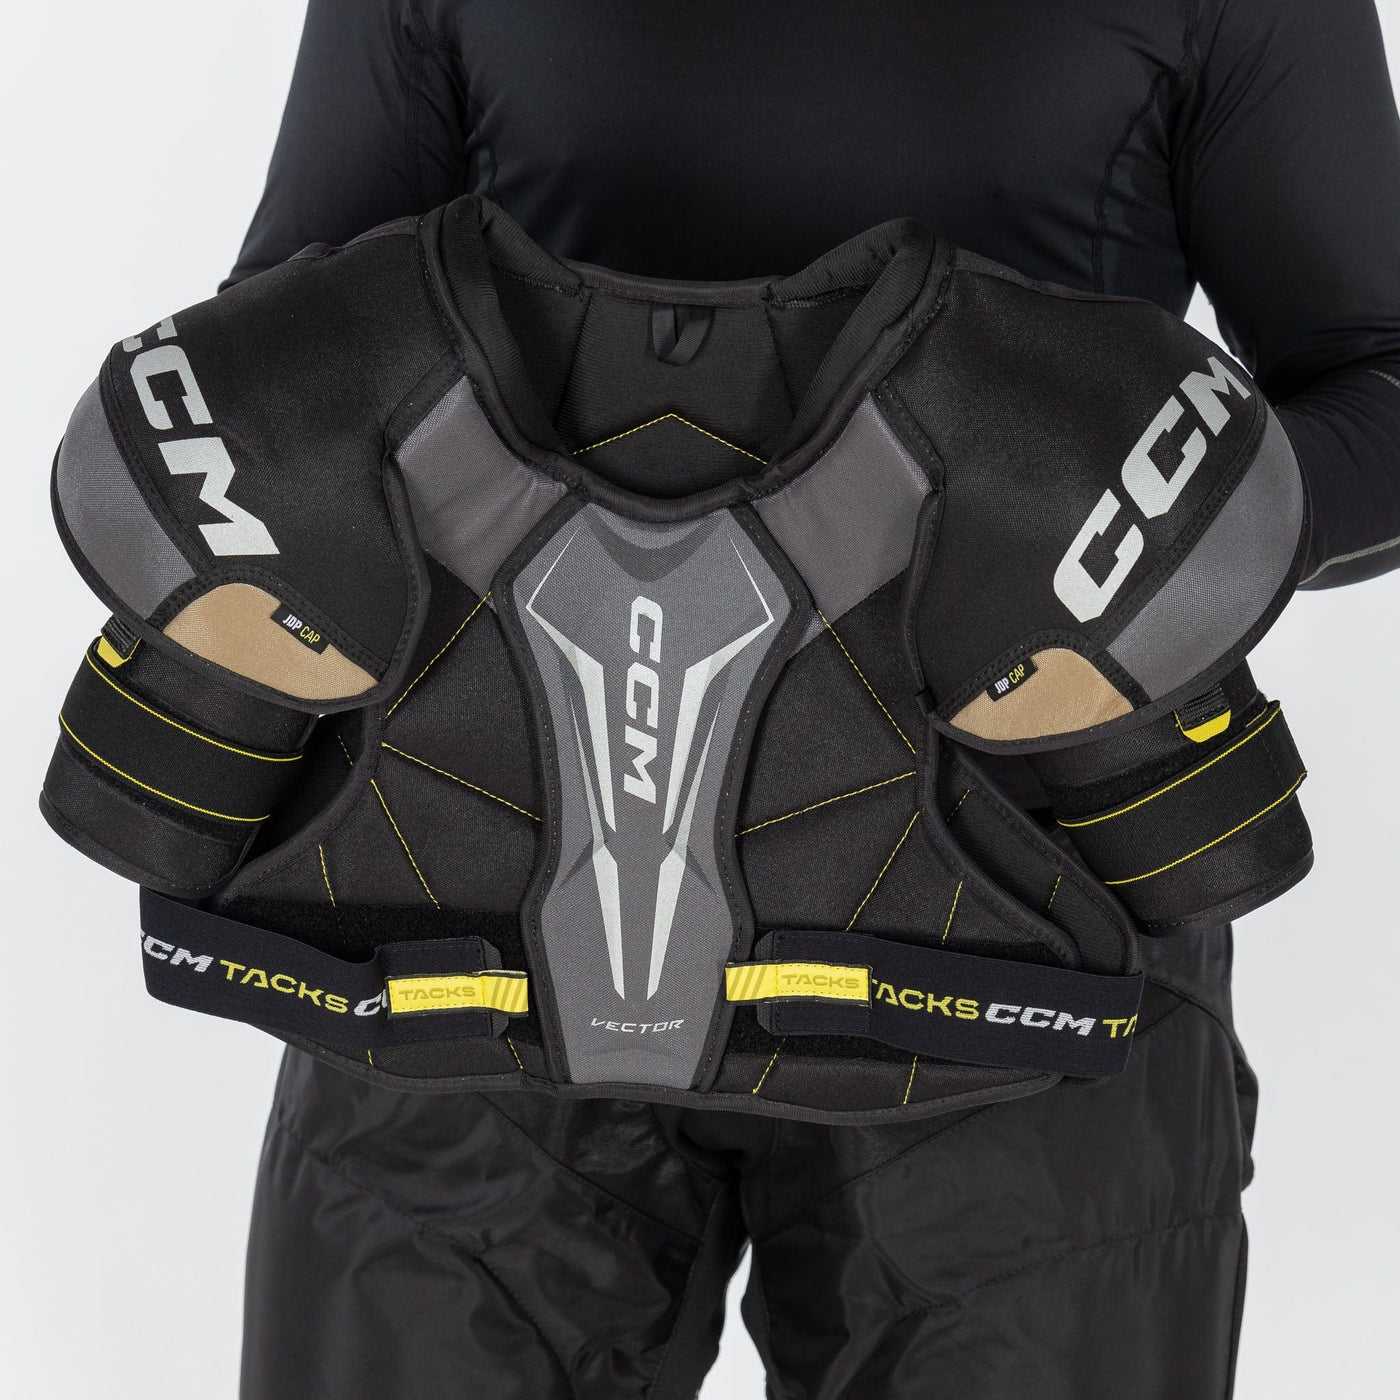 CCM Tacks Vector Senior Hockey Shoulder Pads - The Hockey Shop Source For Sports